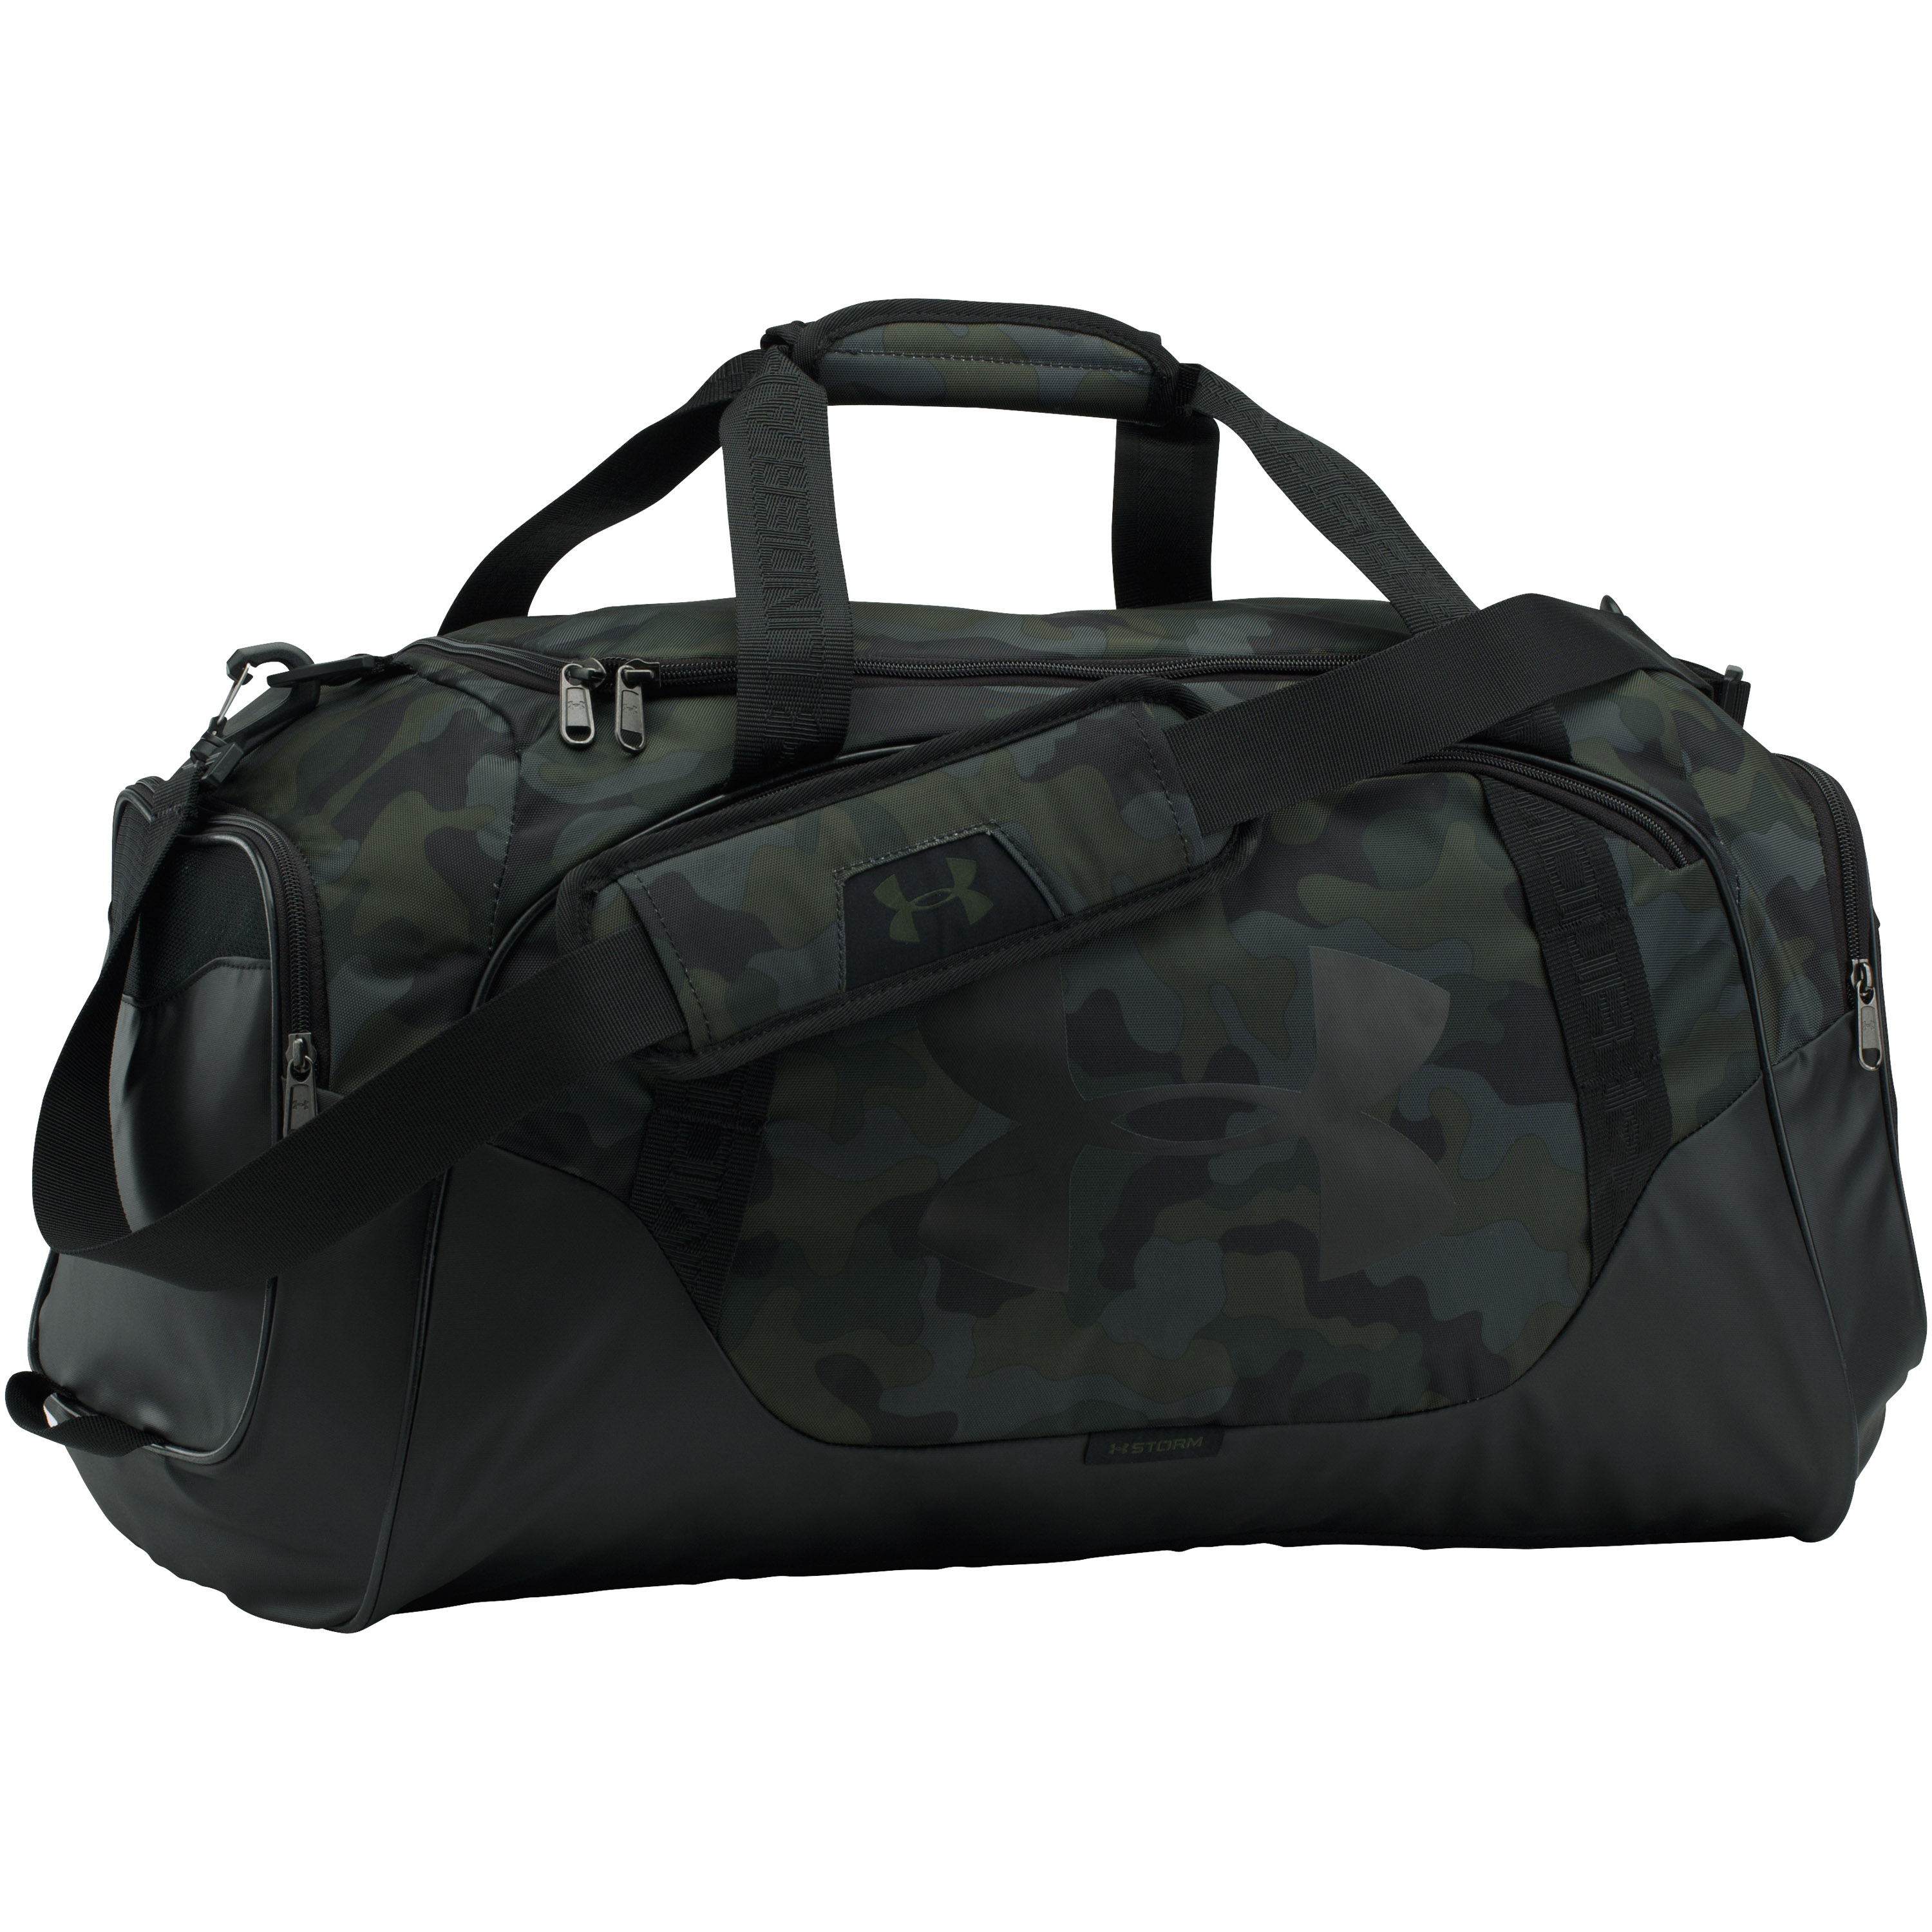 Sport Bag Undeniable Duffle 3.0 Medium camo